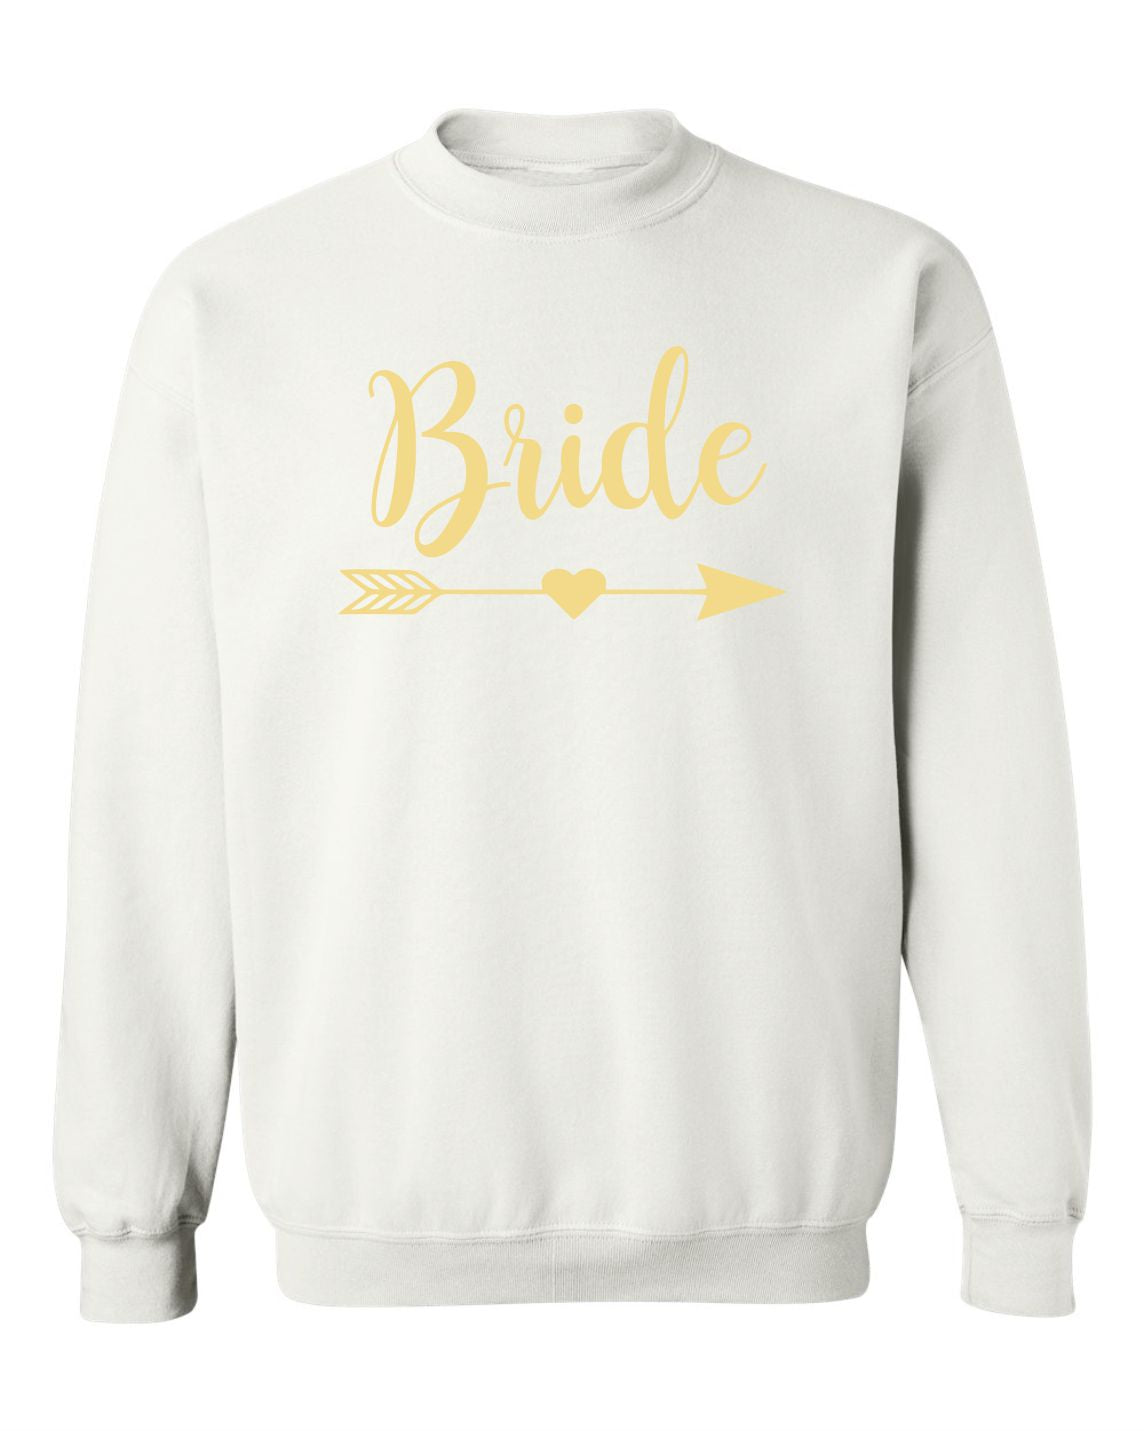 "Bride" (Arrow Heart Design) Unisex Crewneck Sweatshirt